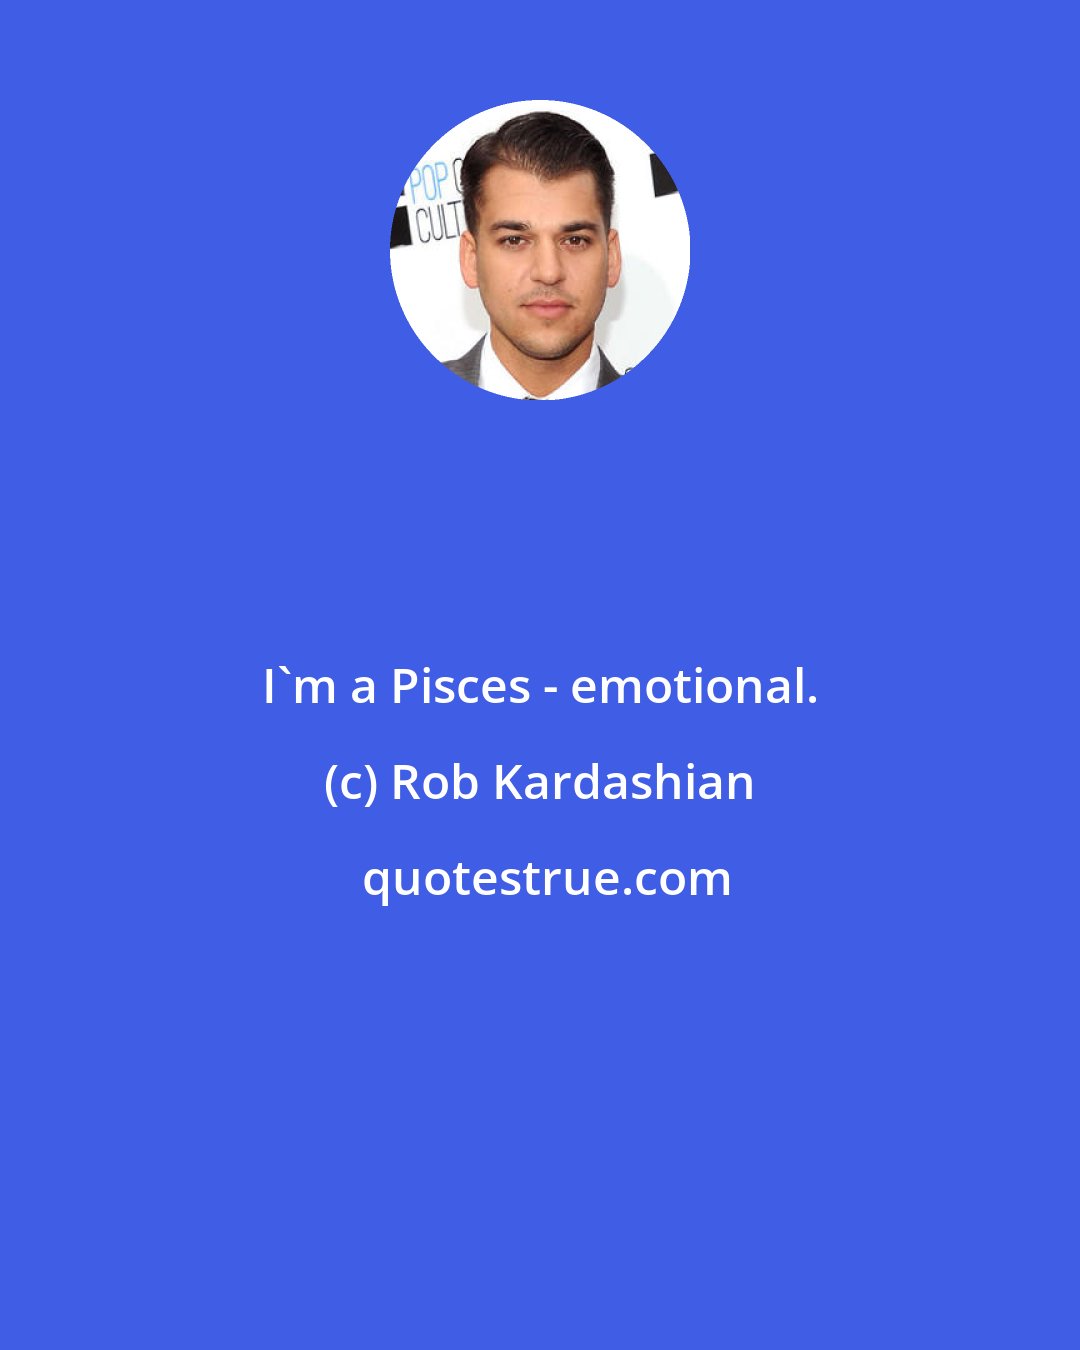 Rob Kardashian: I'm a Pisces - emotional.